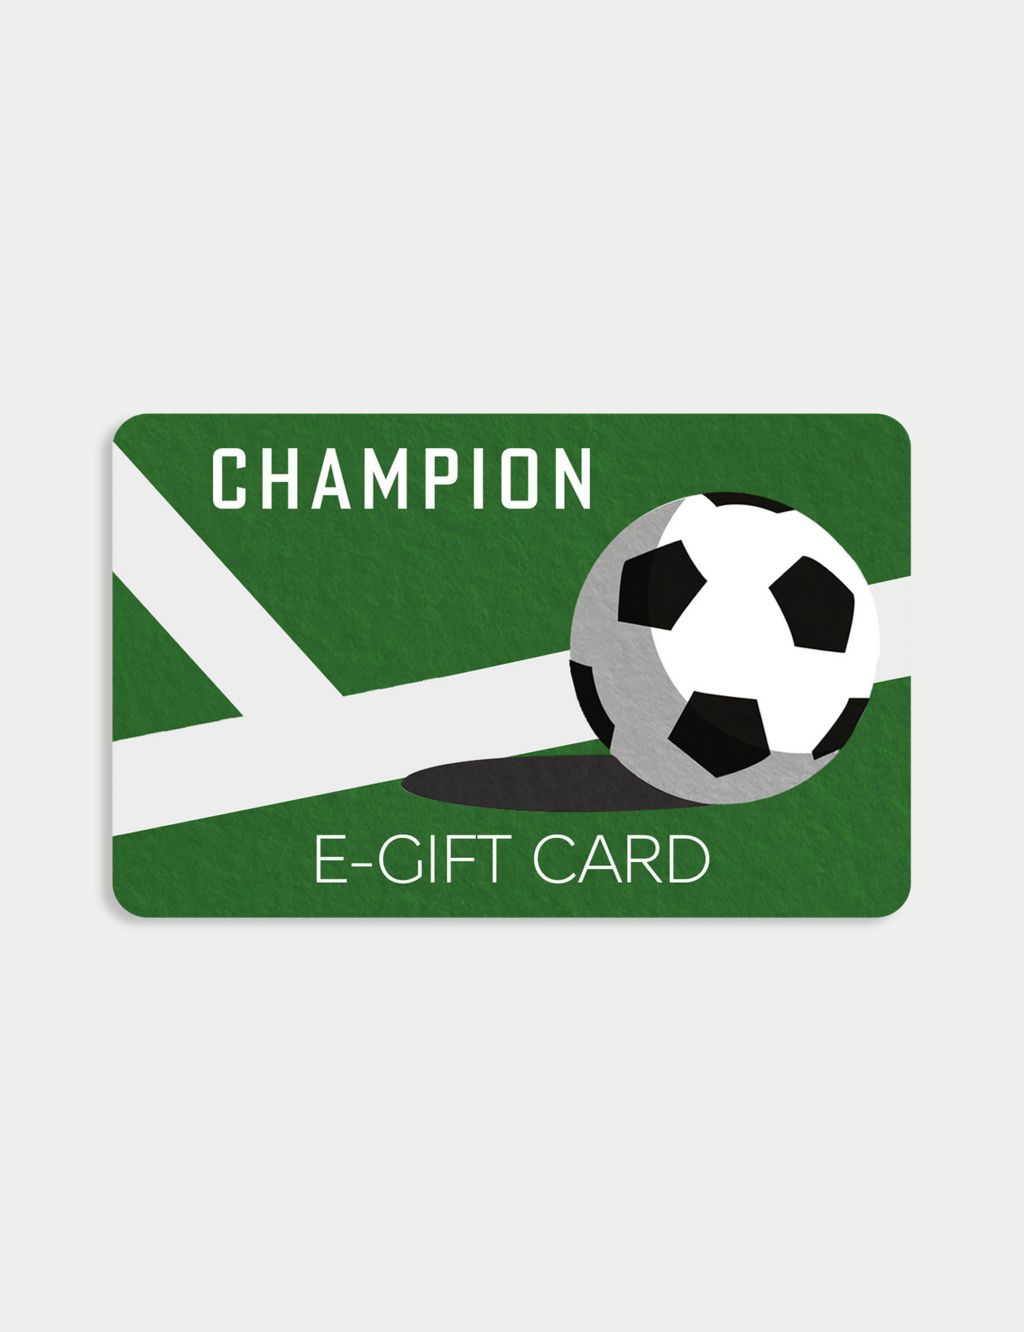 Football E-Gift Card 1 of 1